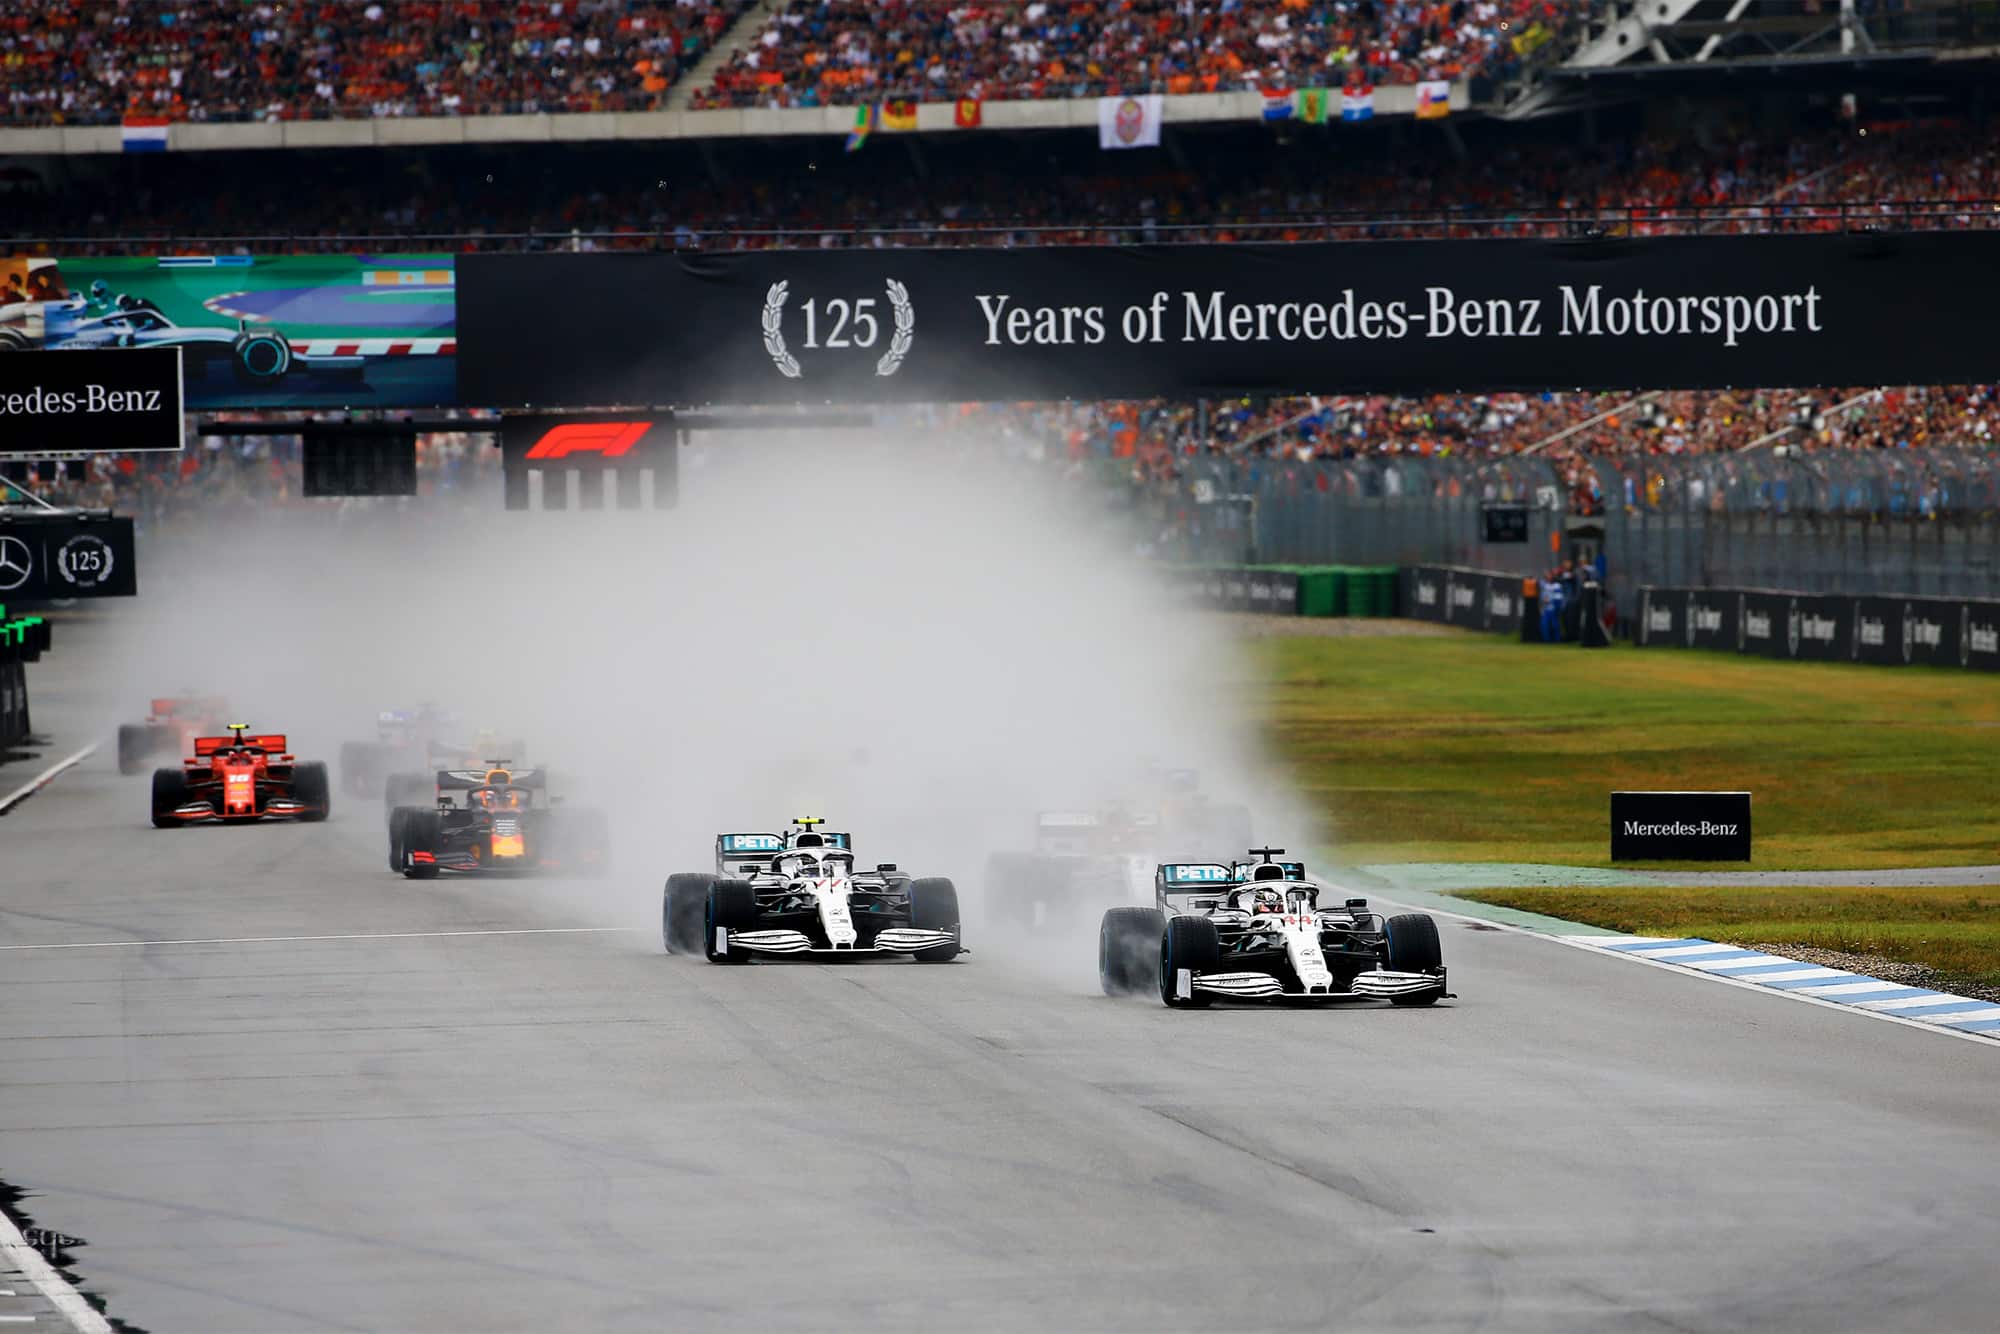 The start of the 2019 German Grand Prix